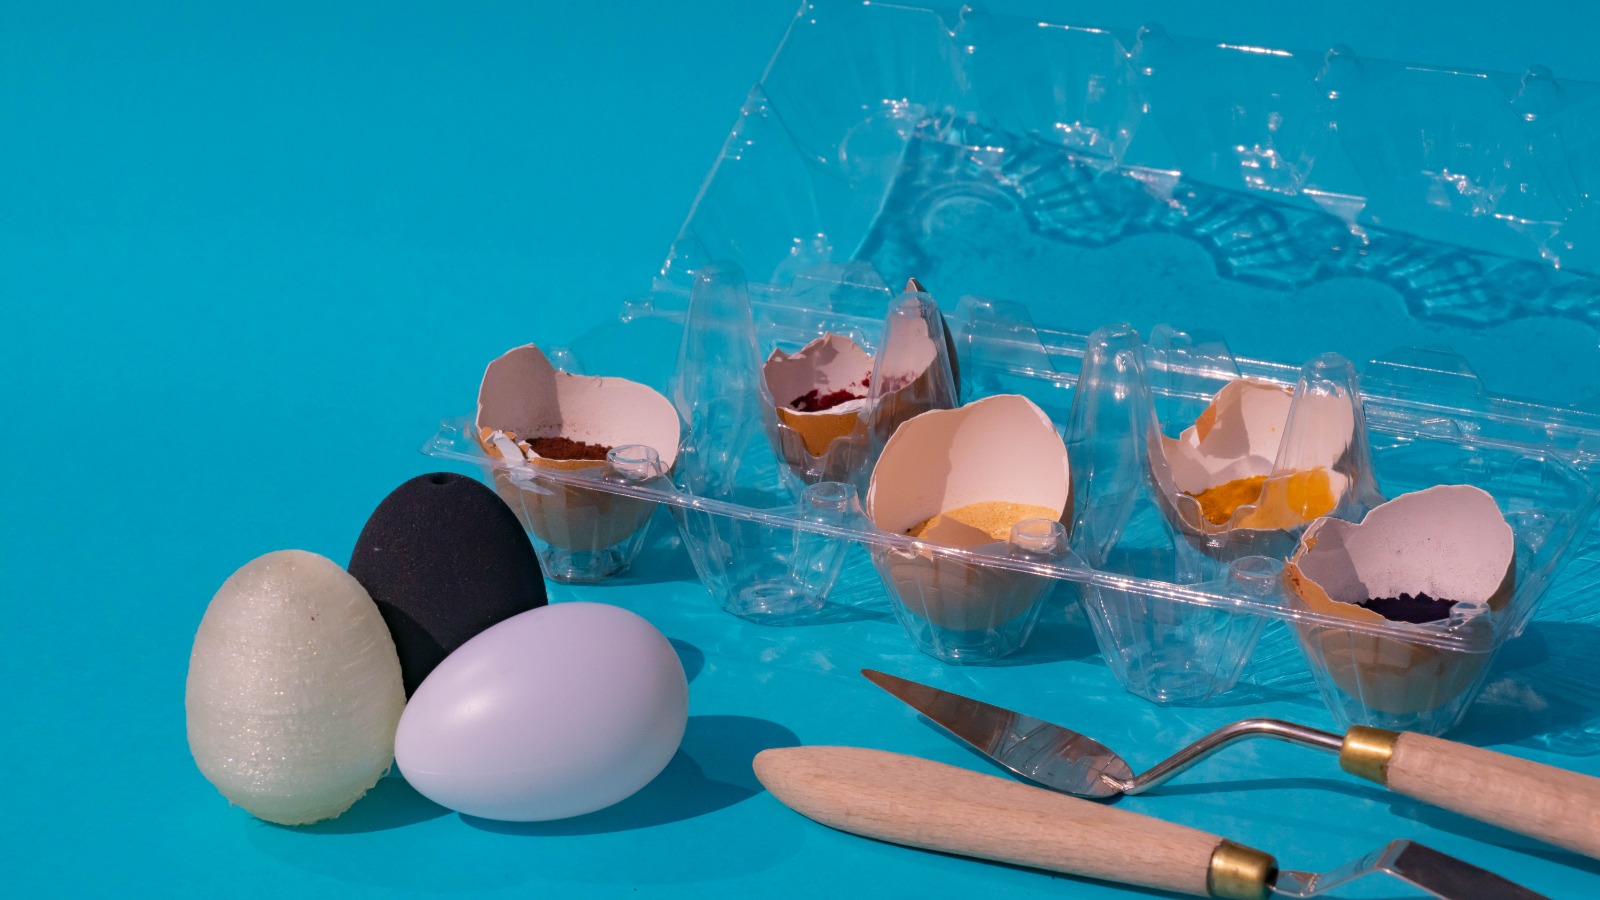 Eggs paint making kit